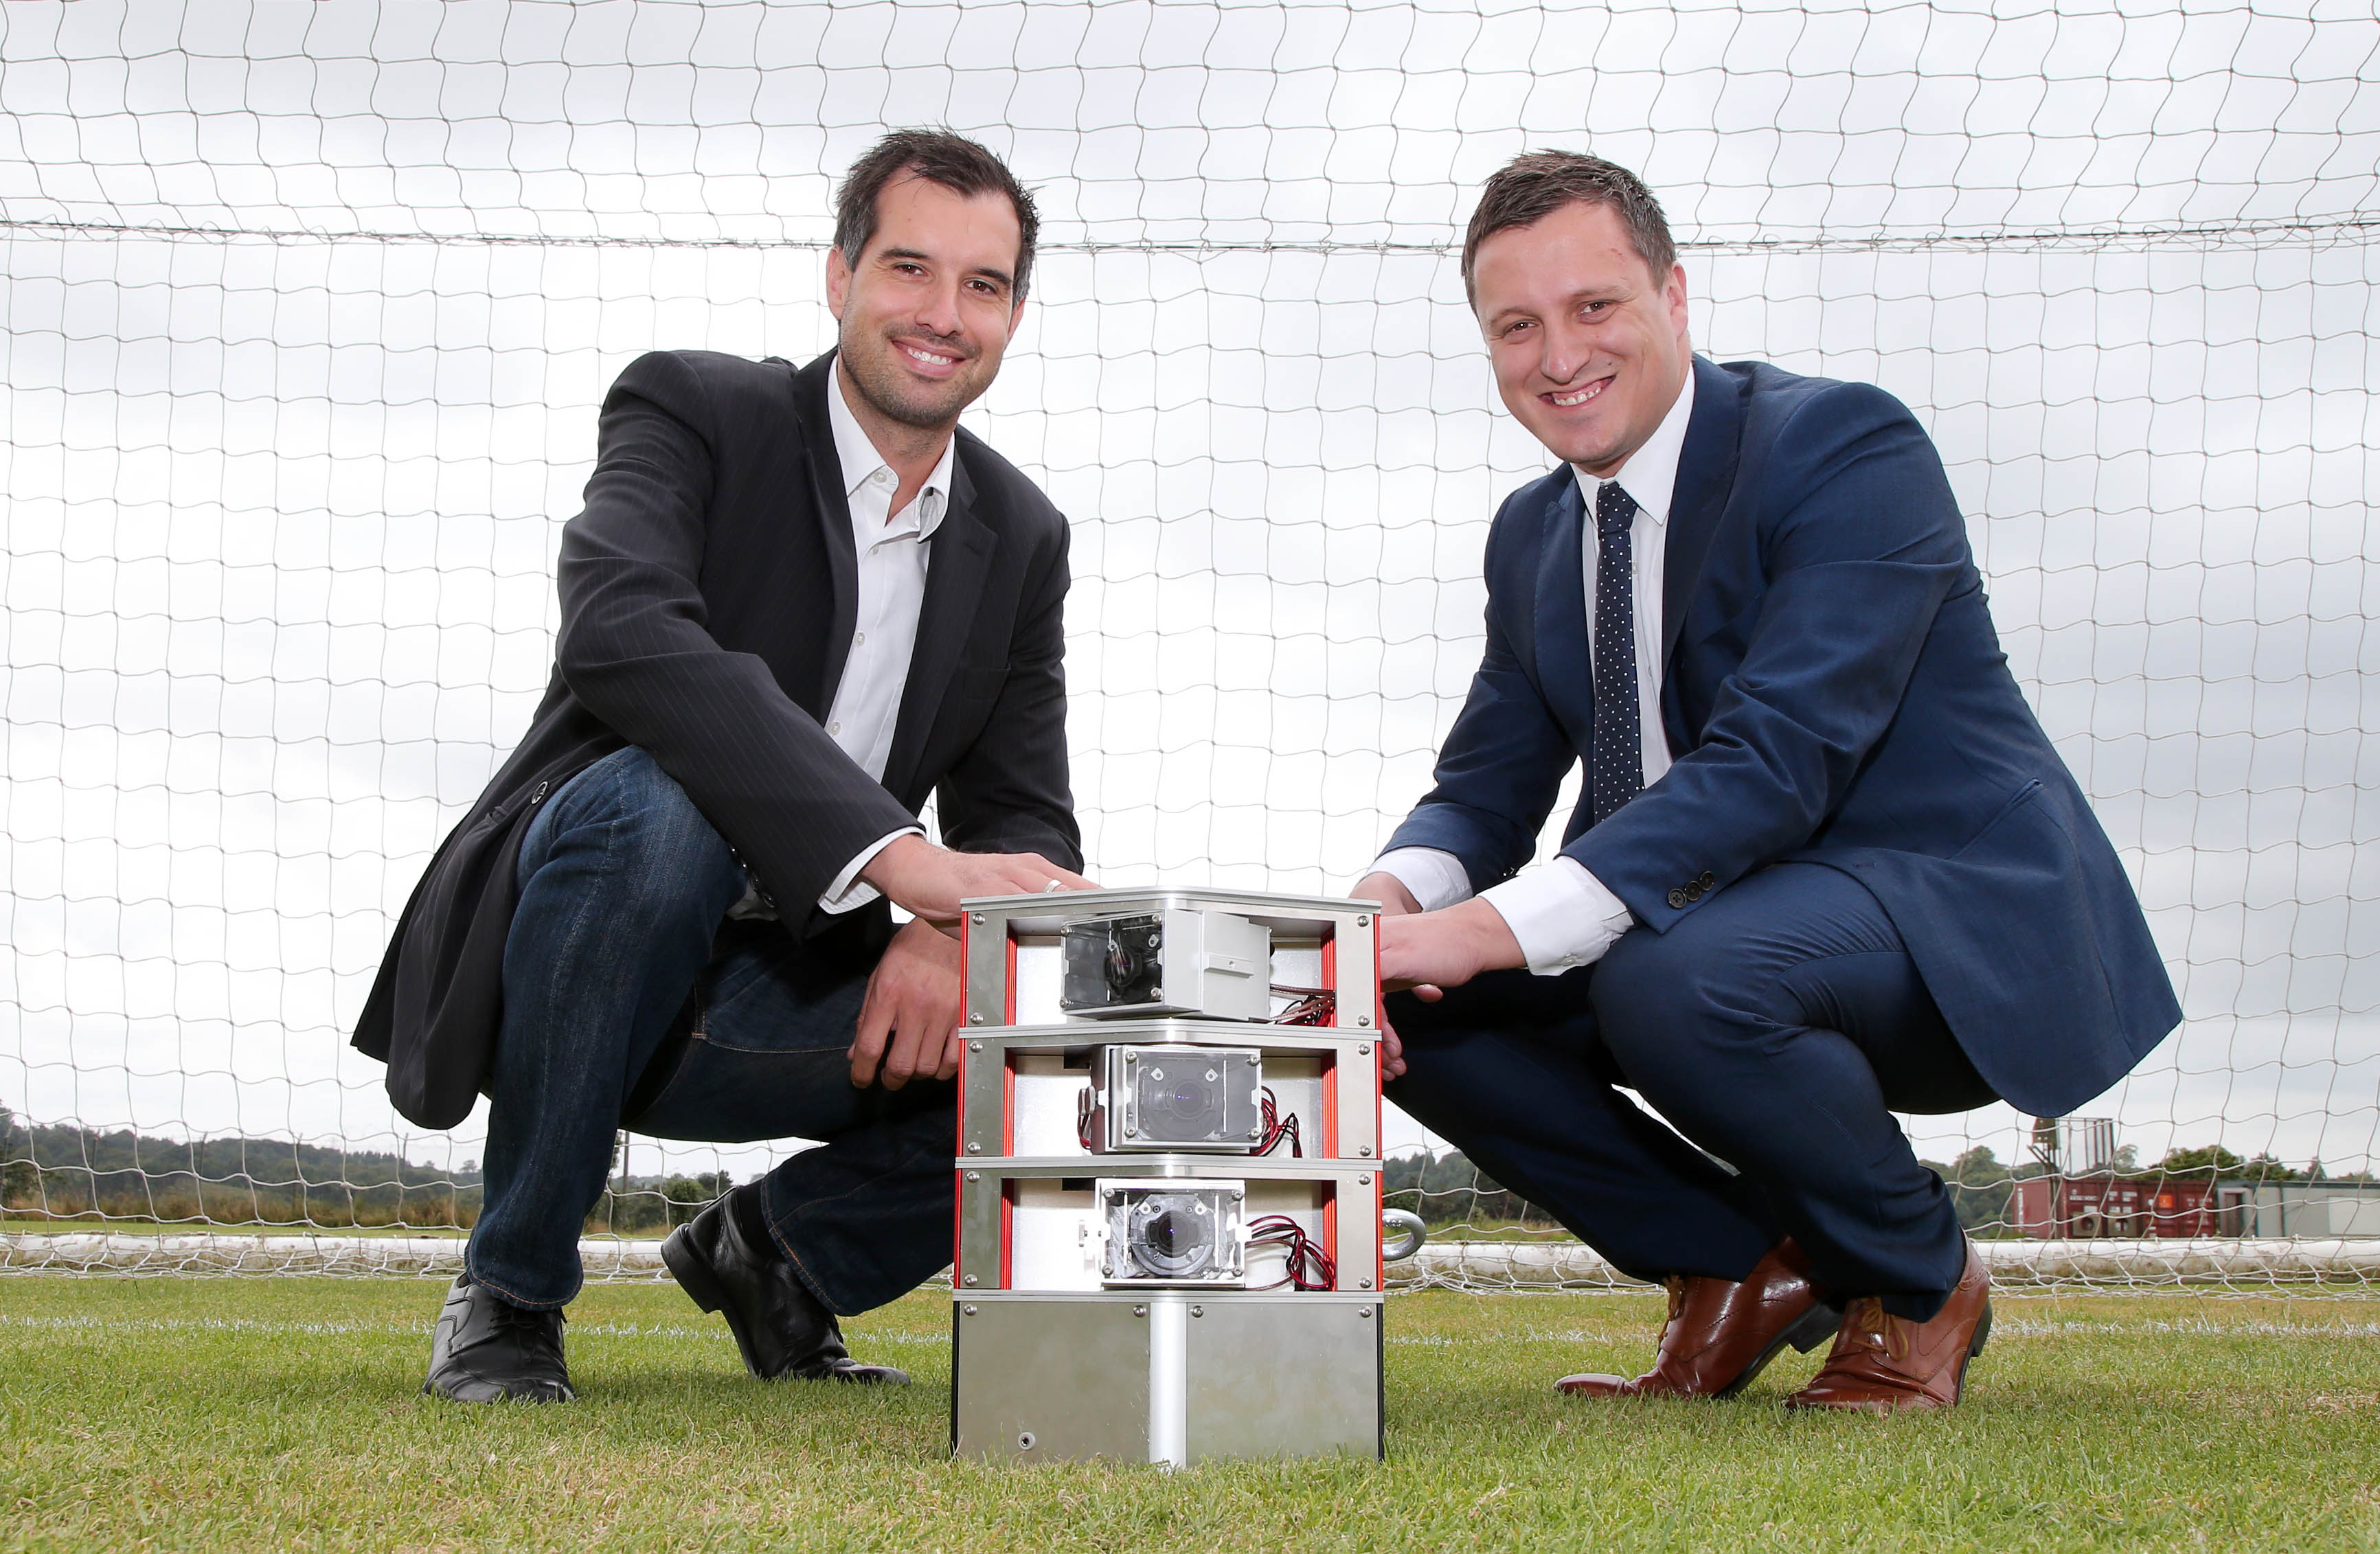 NI Football League’s Managing Director Andrew Johnston alongside Martin Füreder CEO of TrackChamp 